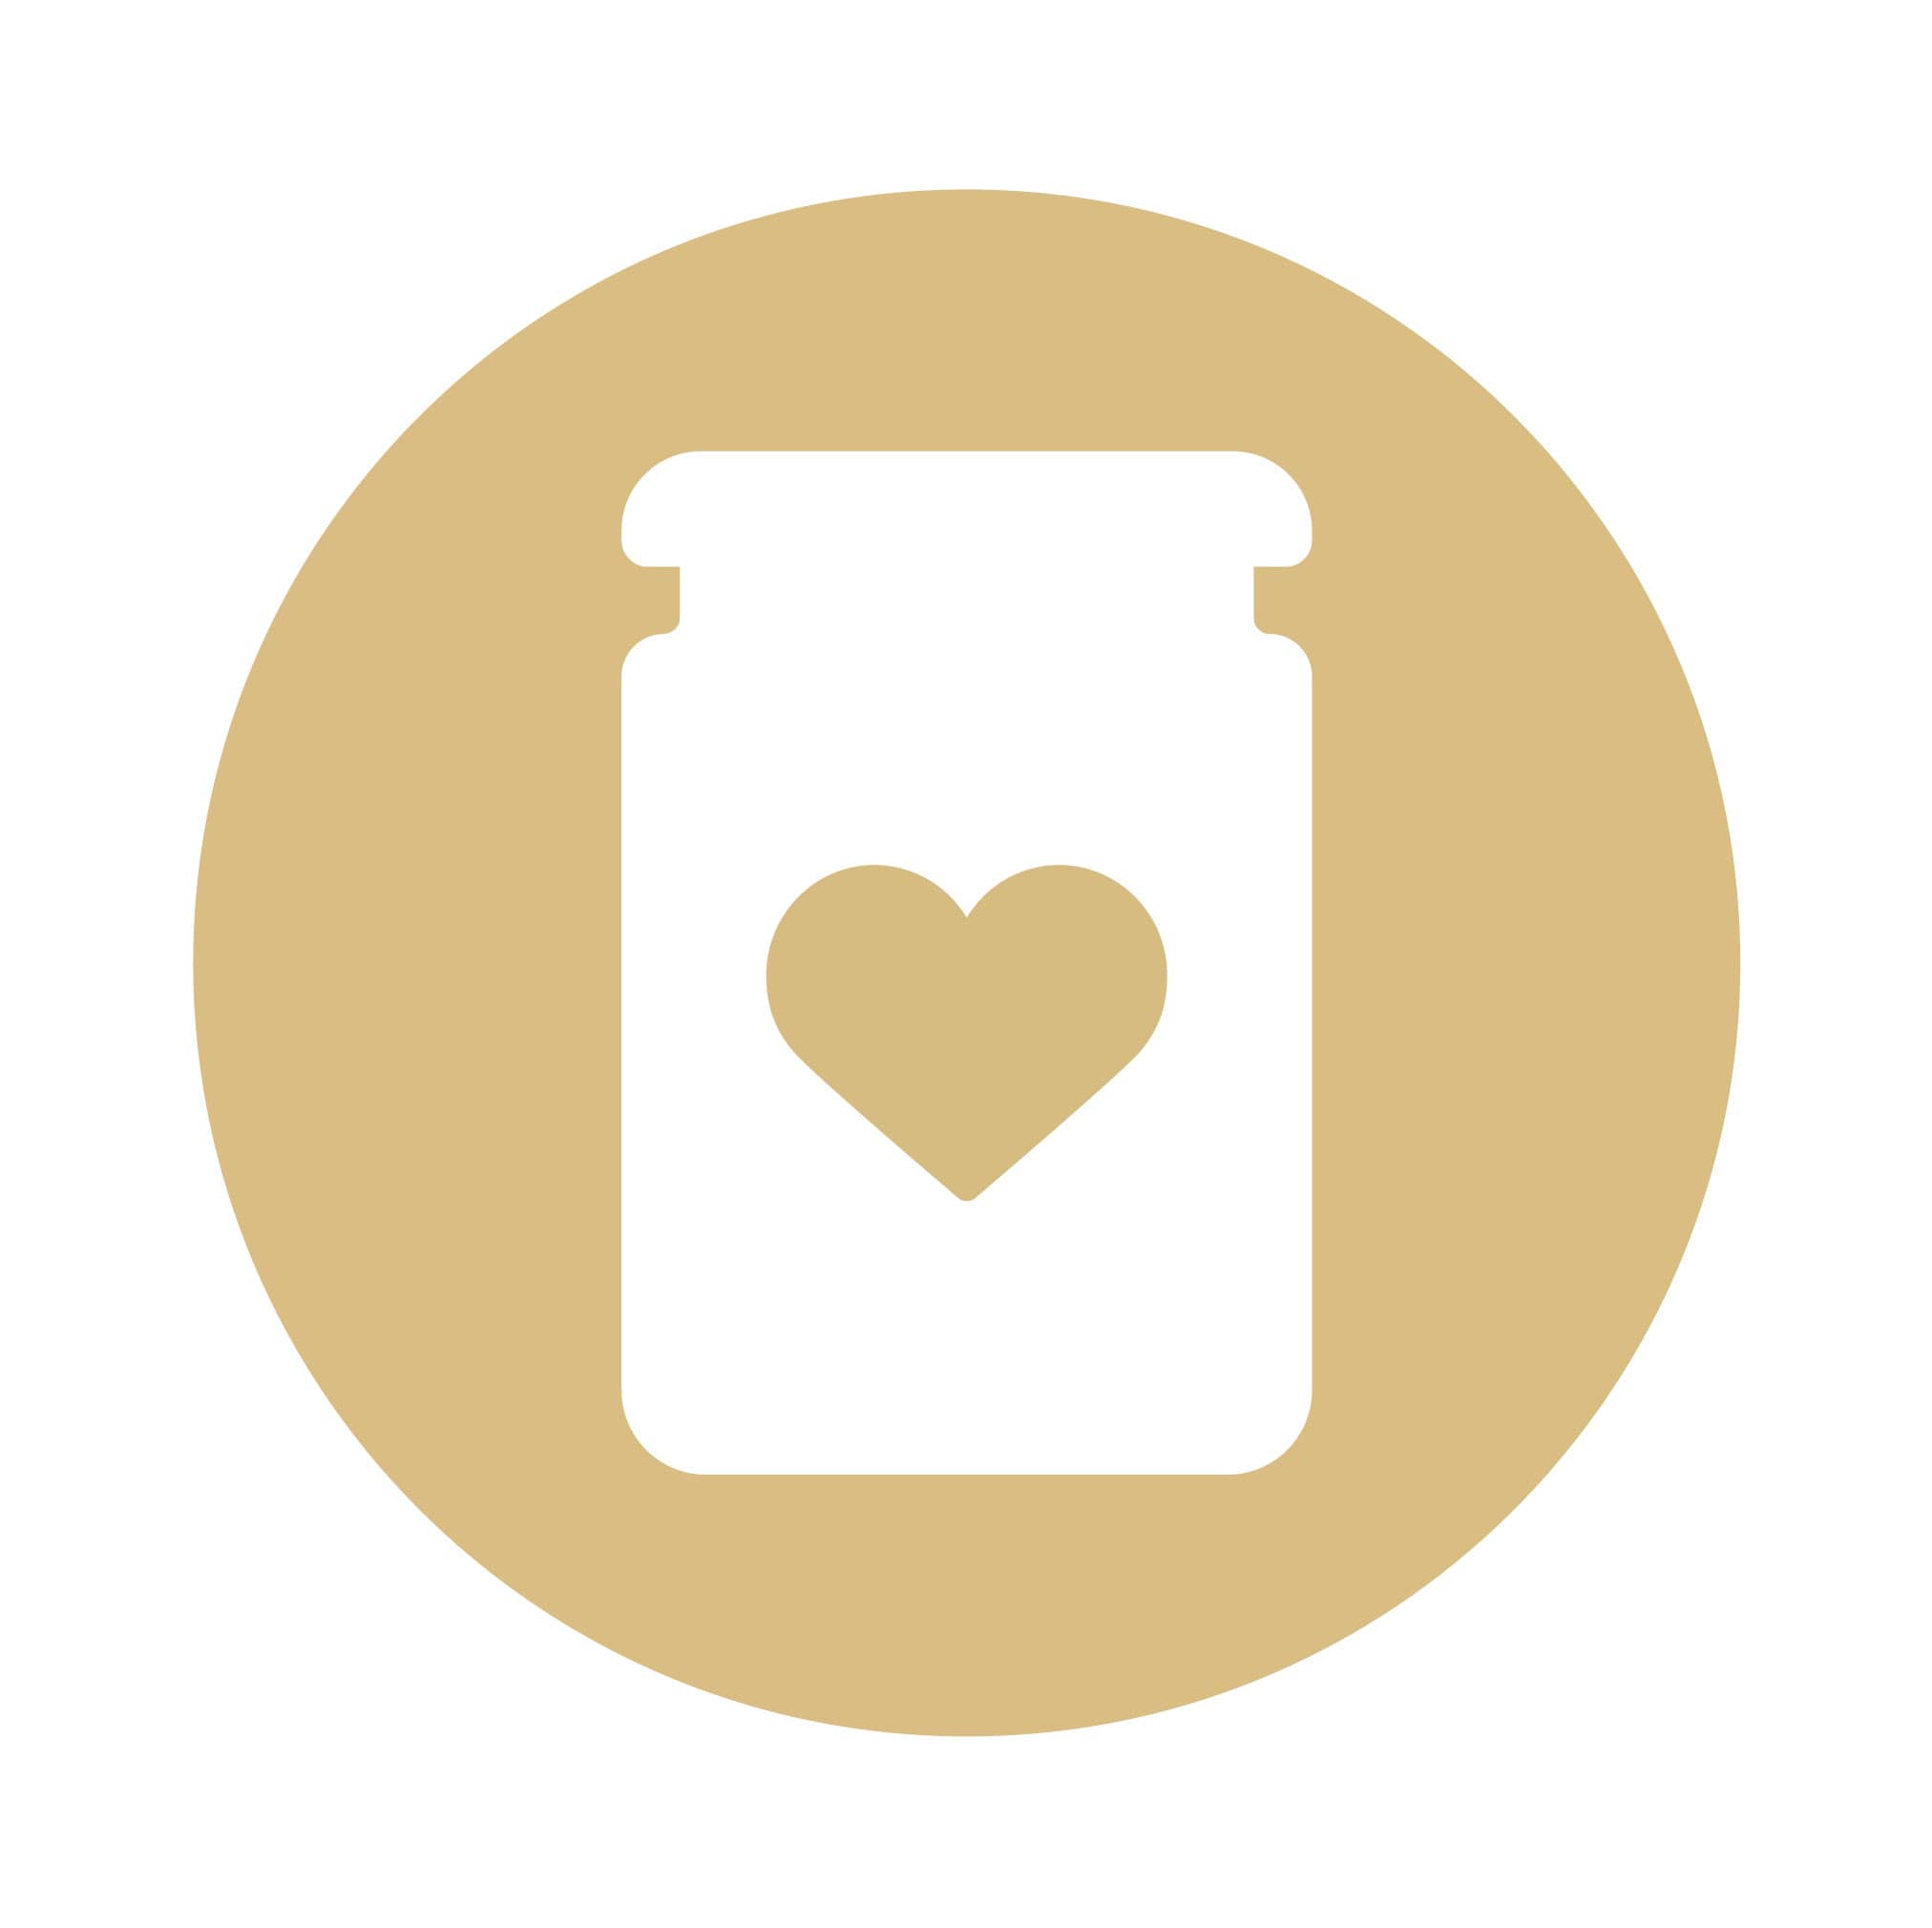 icon, leggos jar with a heart